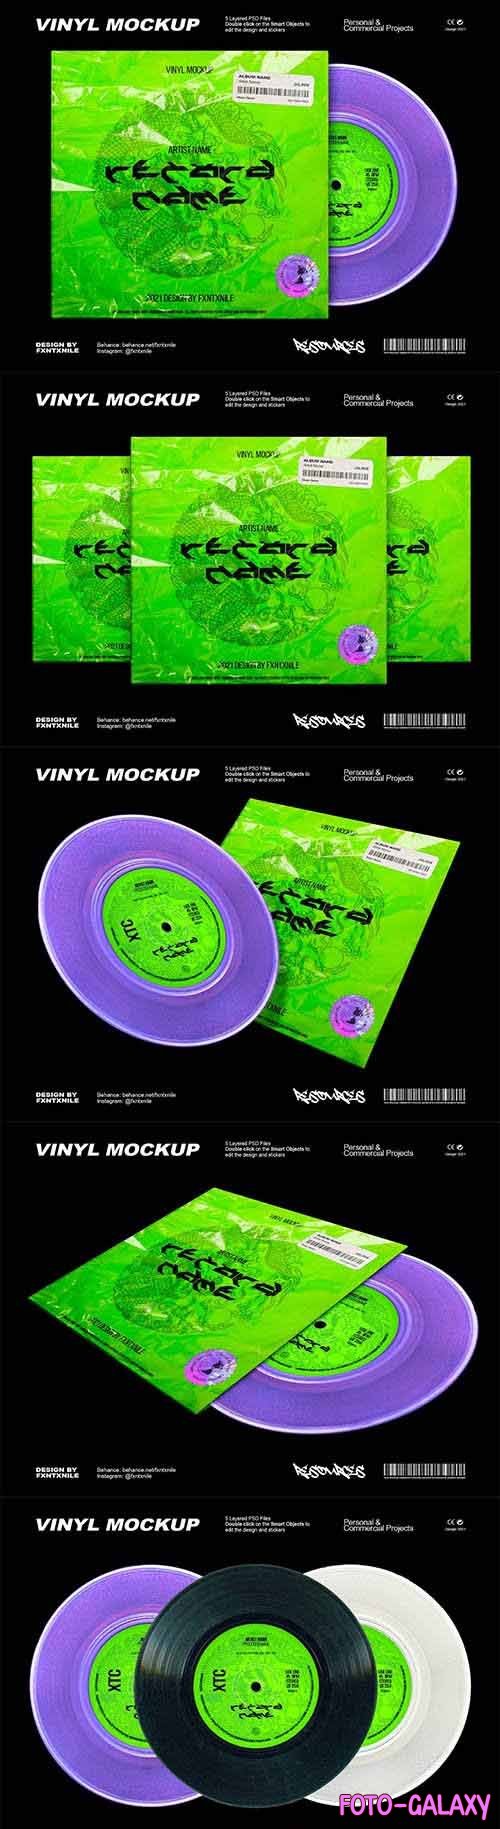 Vinyl Mockup - 6521620